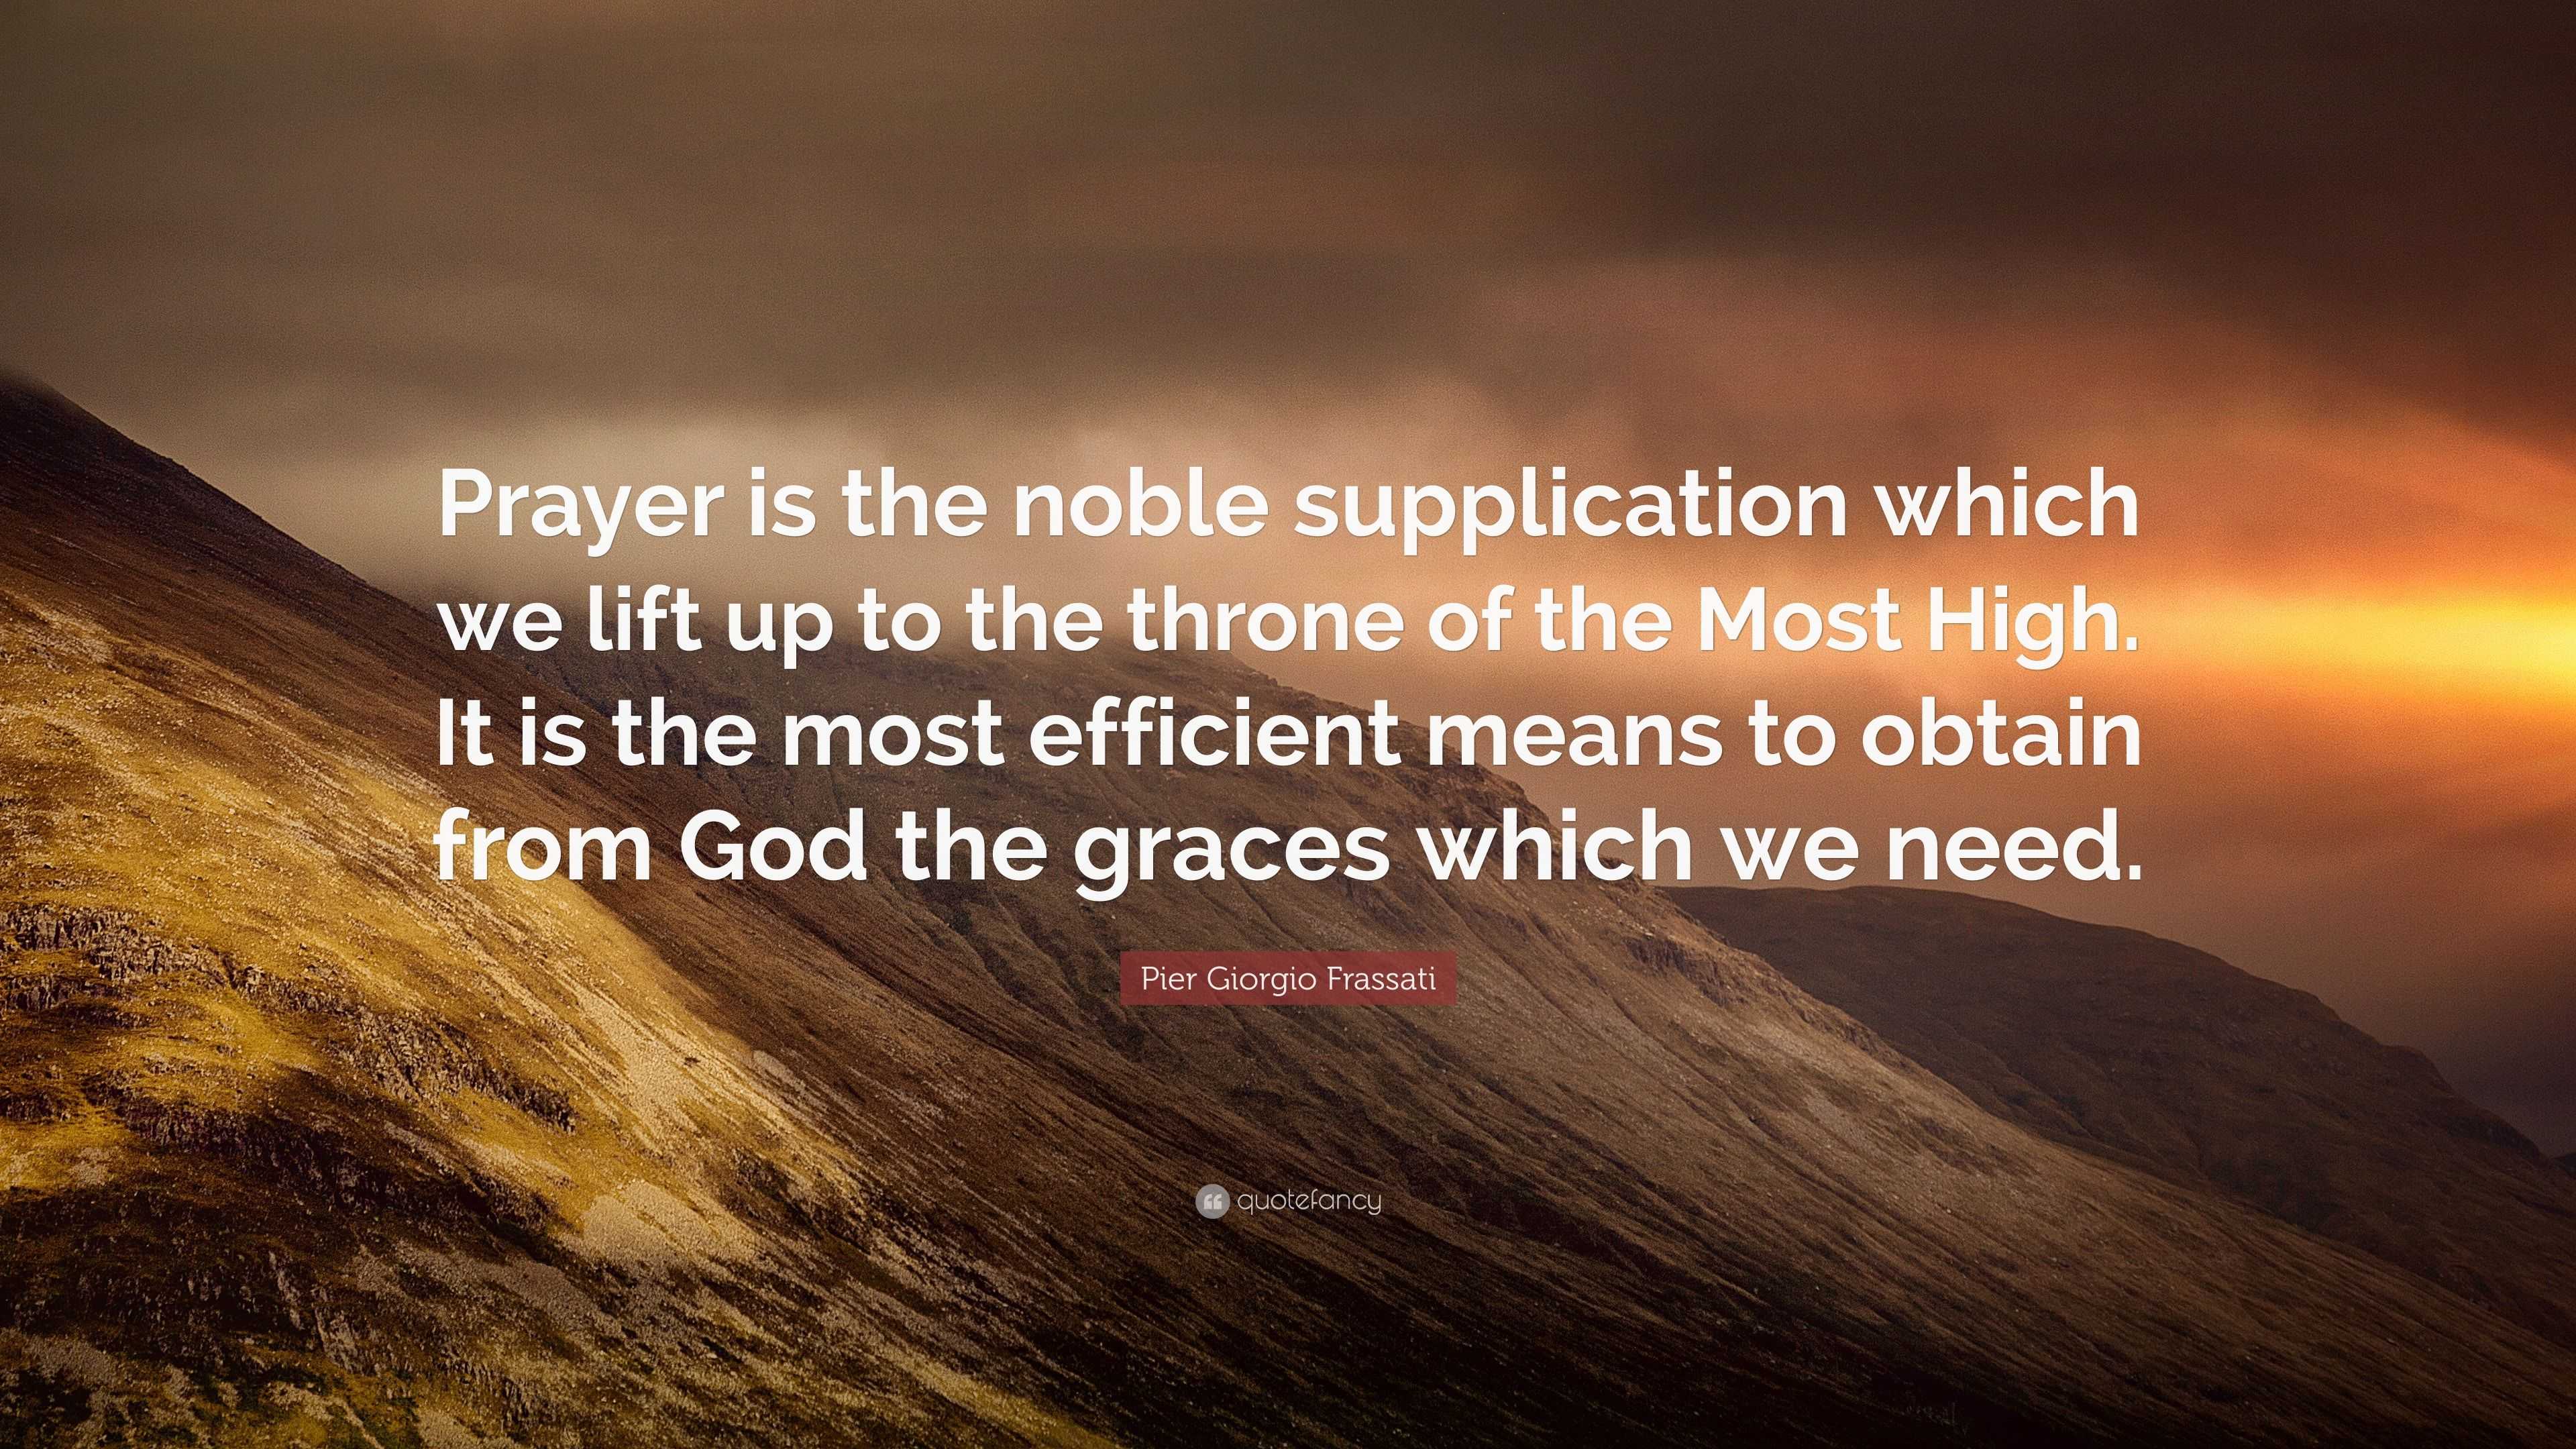 Pier Giorgio Frassati Quote: “Prayer is the noble supplication which we ...